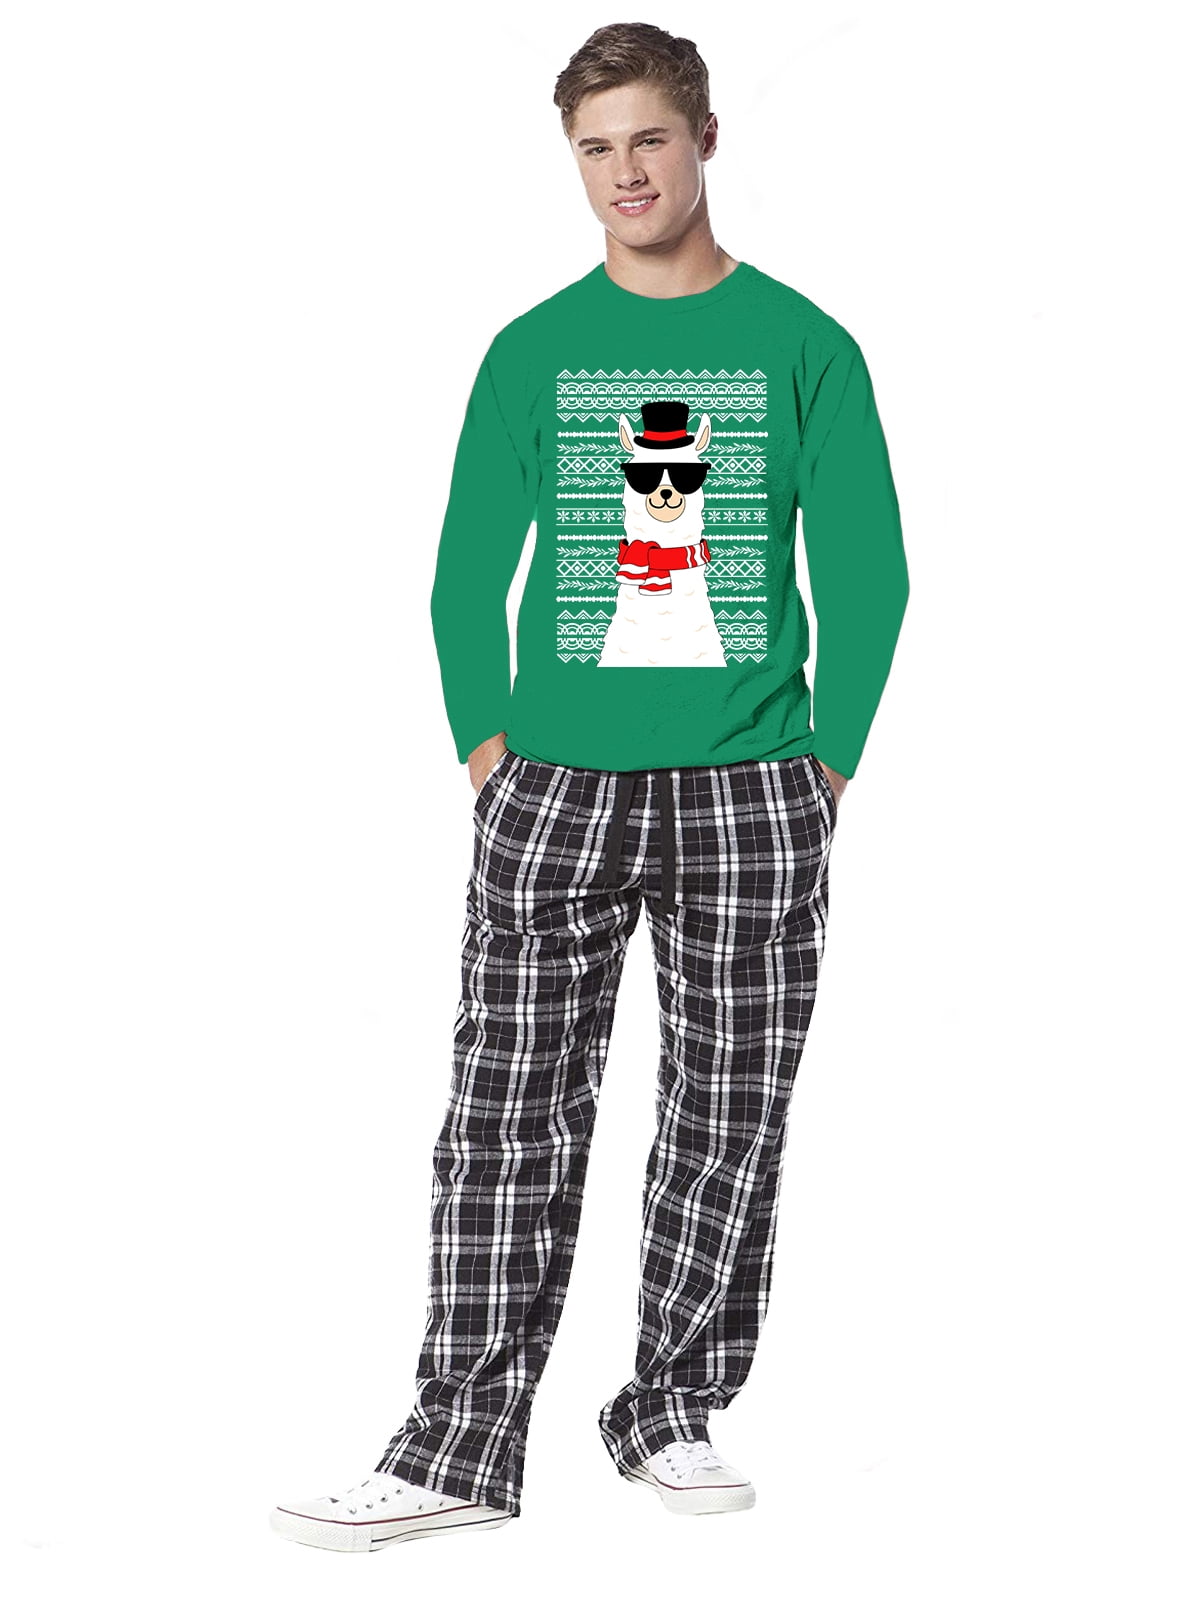 Awkward Styles - Awkward Styles Family Christmas Pajamas for Men Xmas ...